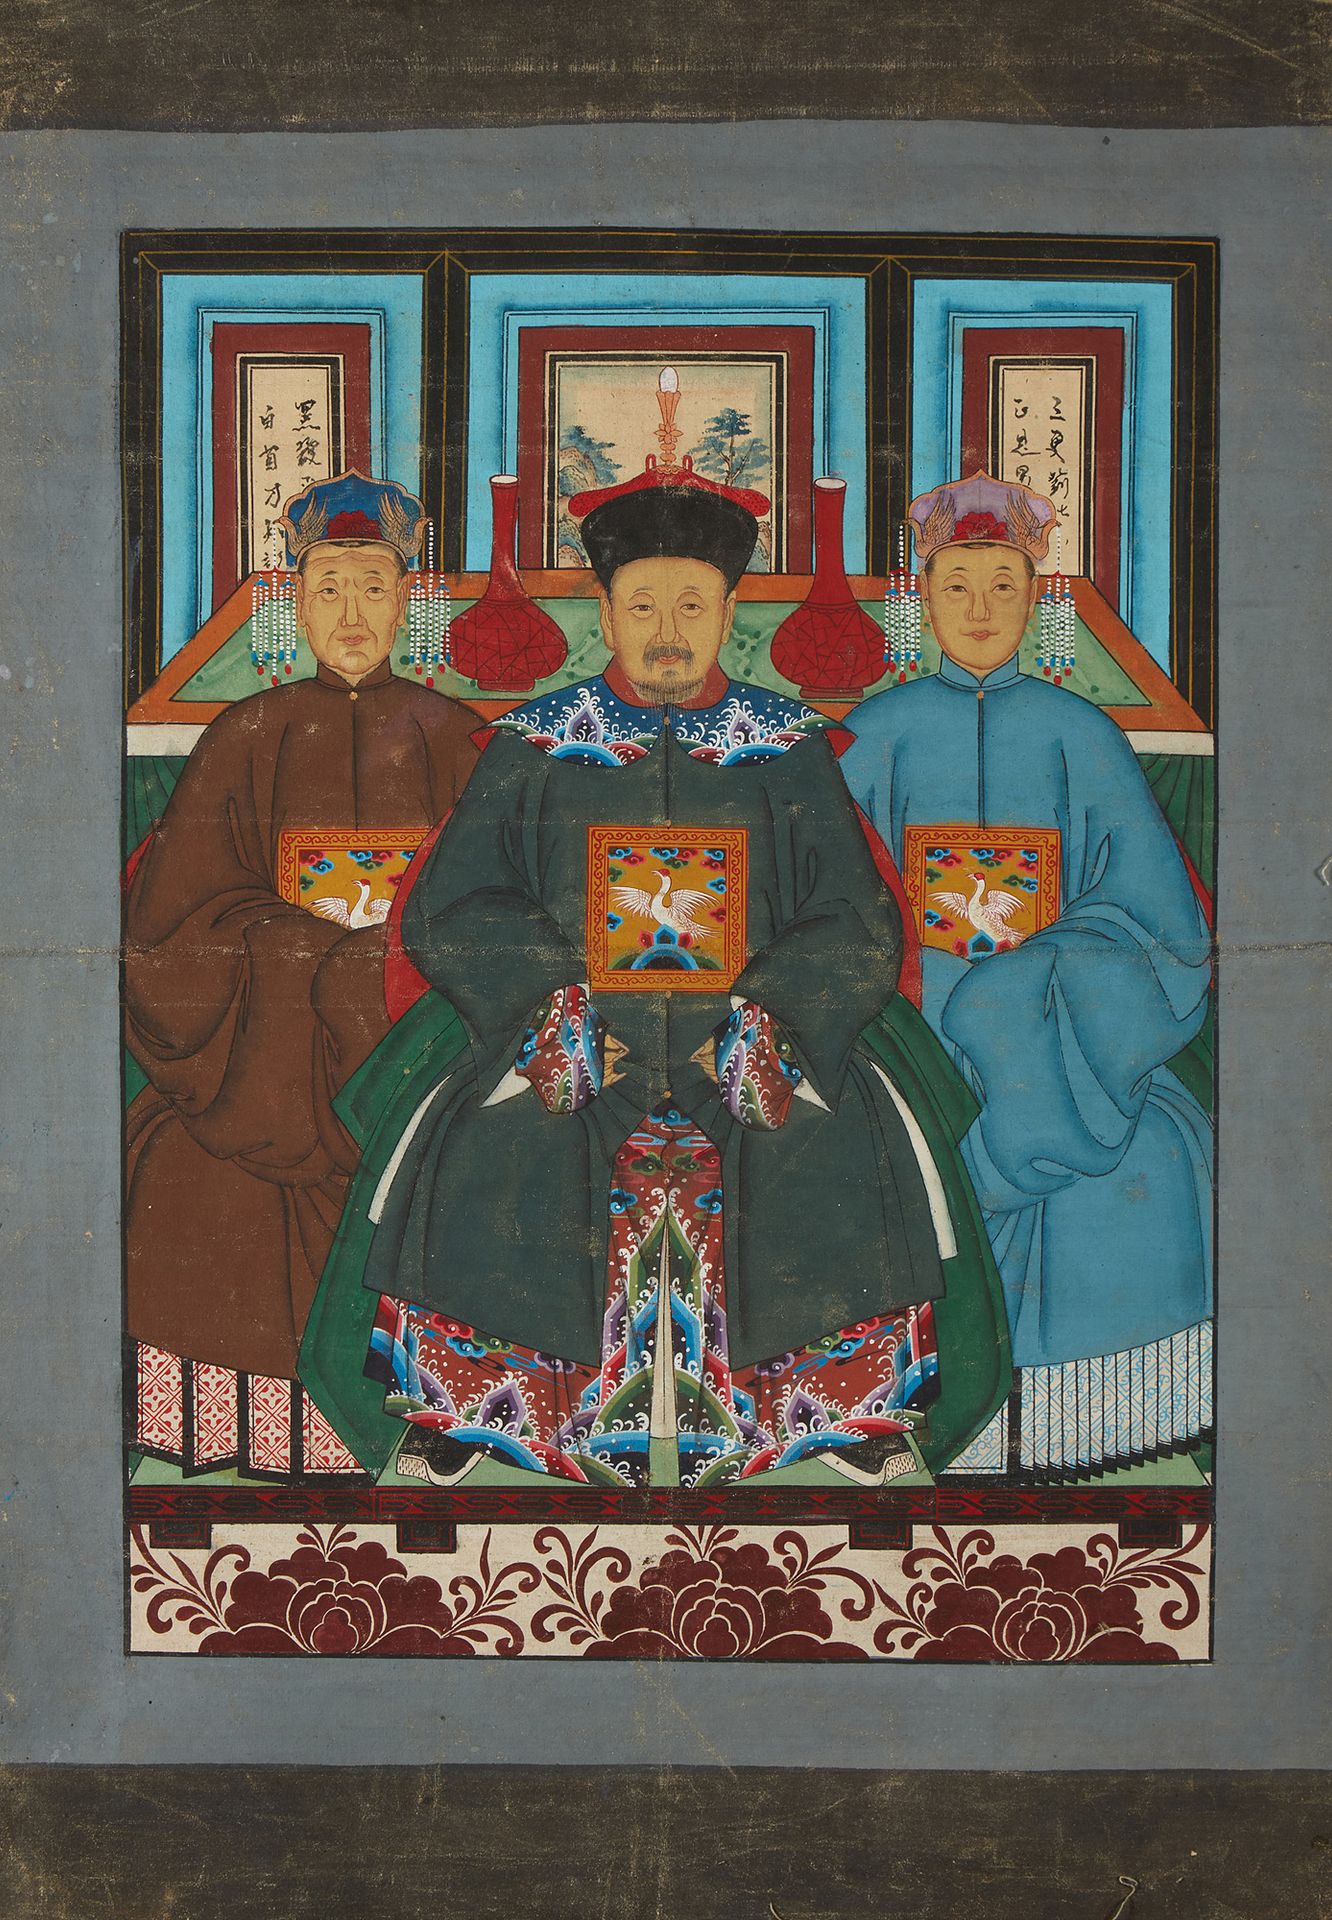 CHINE Retrato de tres dignatarios.
Pintura sobre tela.
Dim.: 80 x 67cm